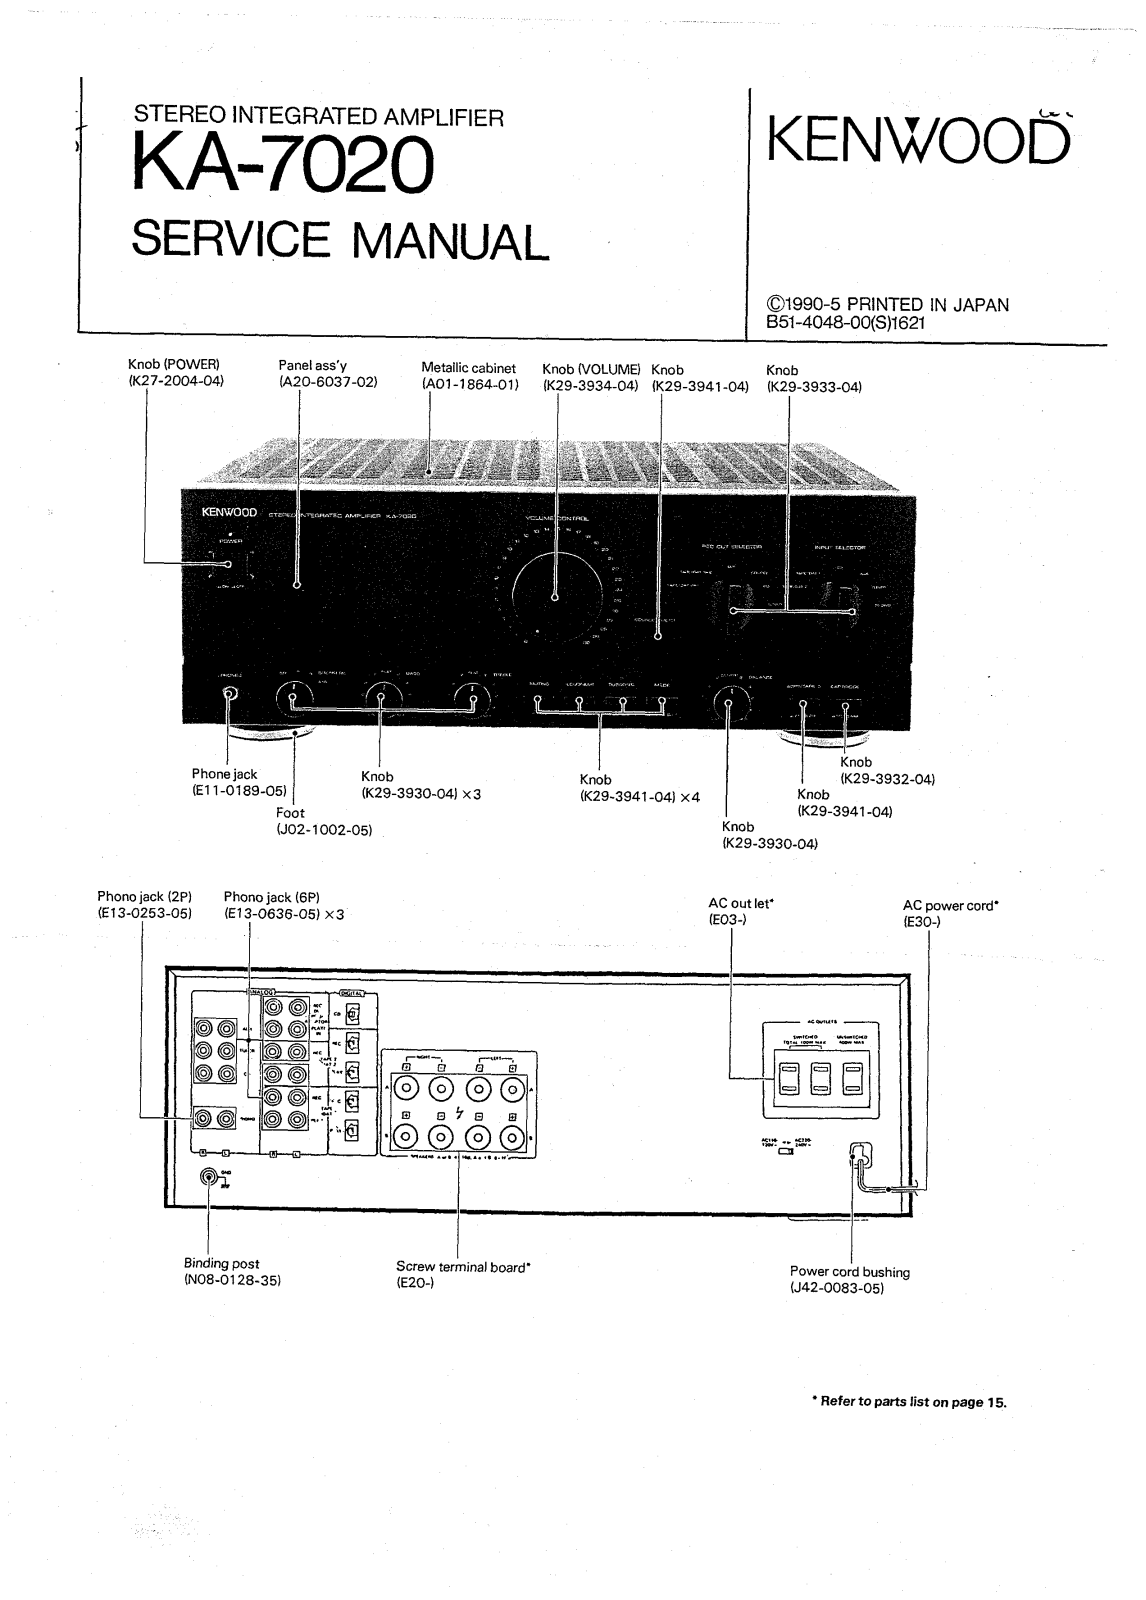 Kenwood KA-7020 Service manual